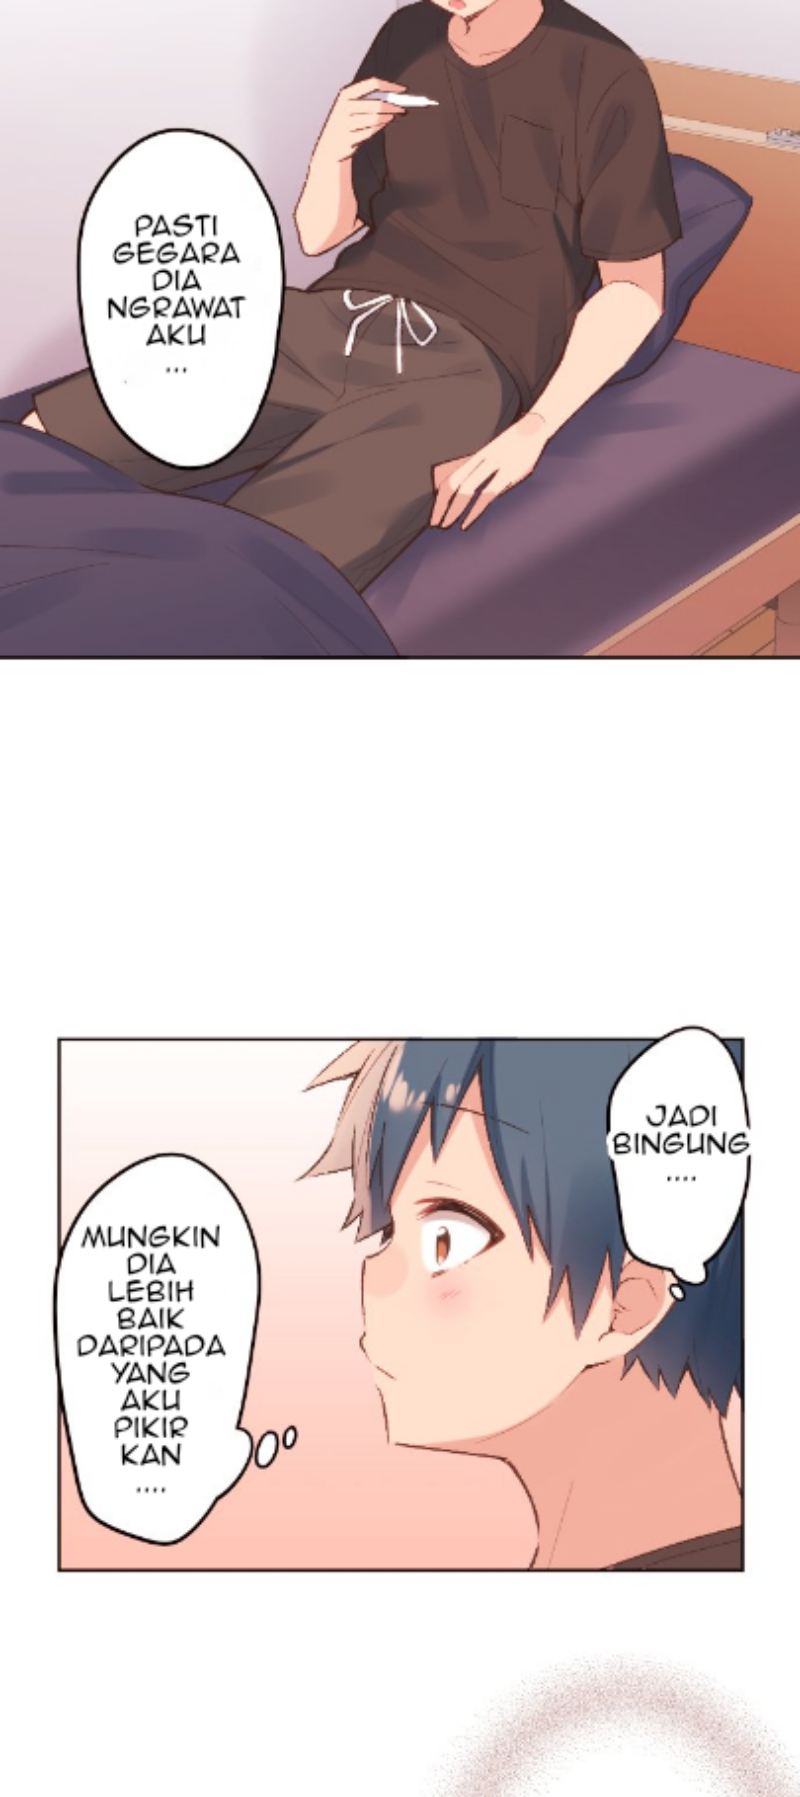 Waka-chan Is Flirty Again Chapter 44